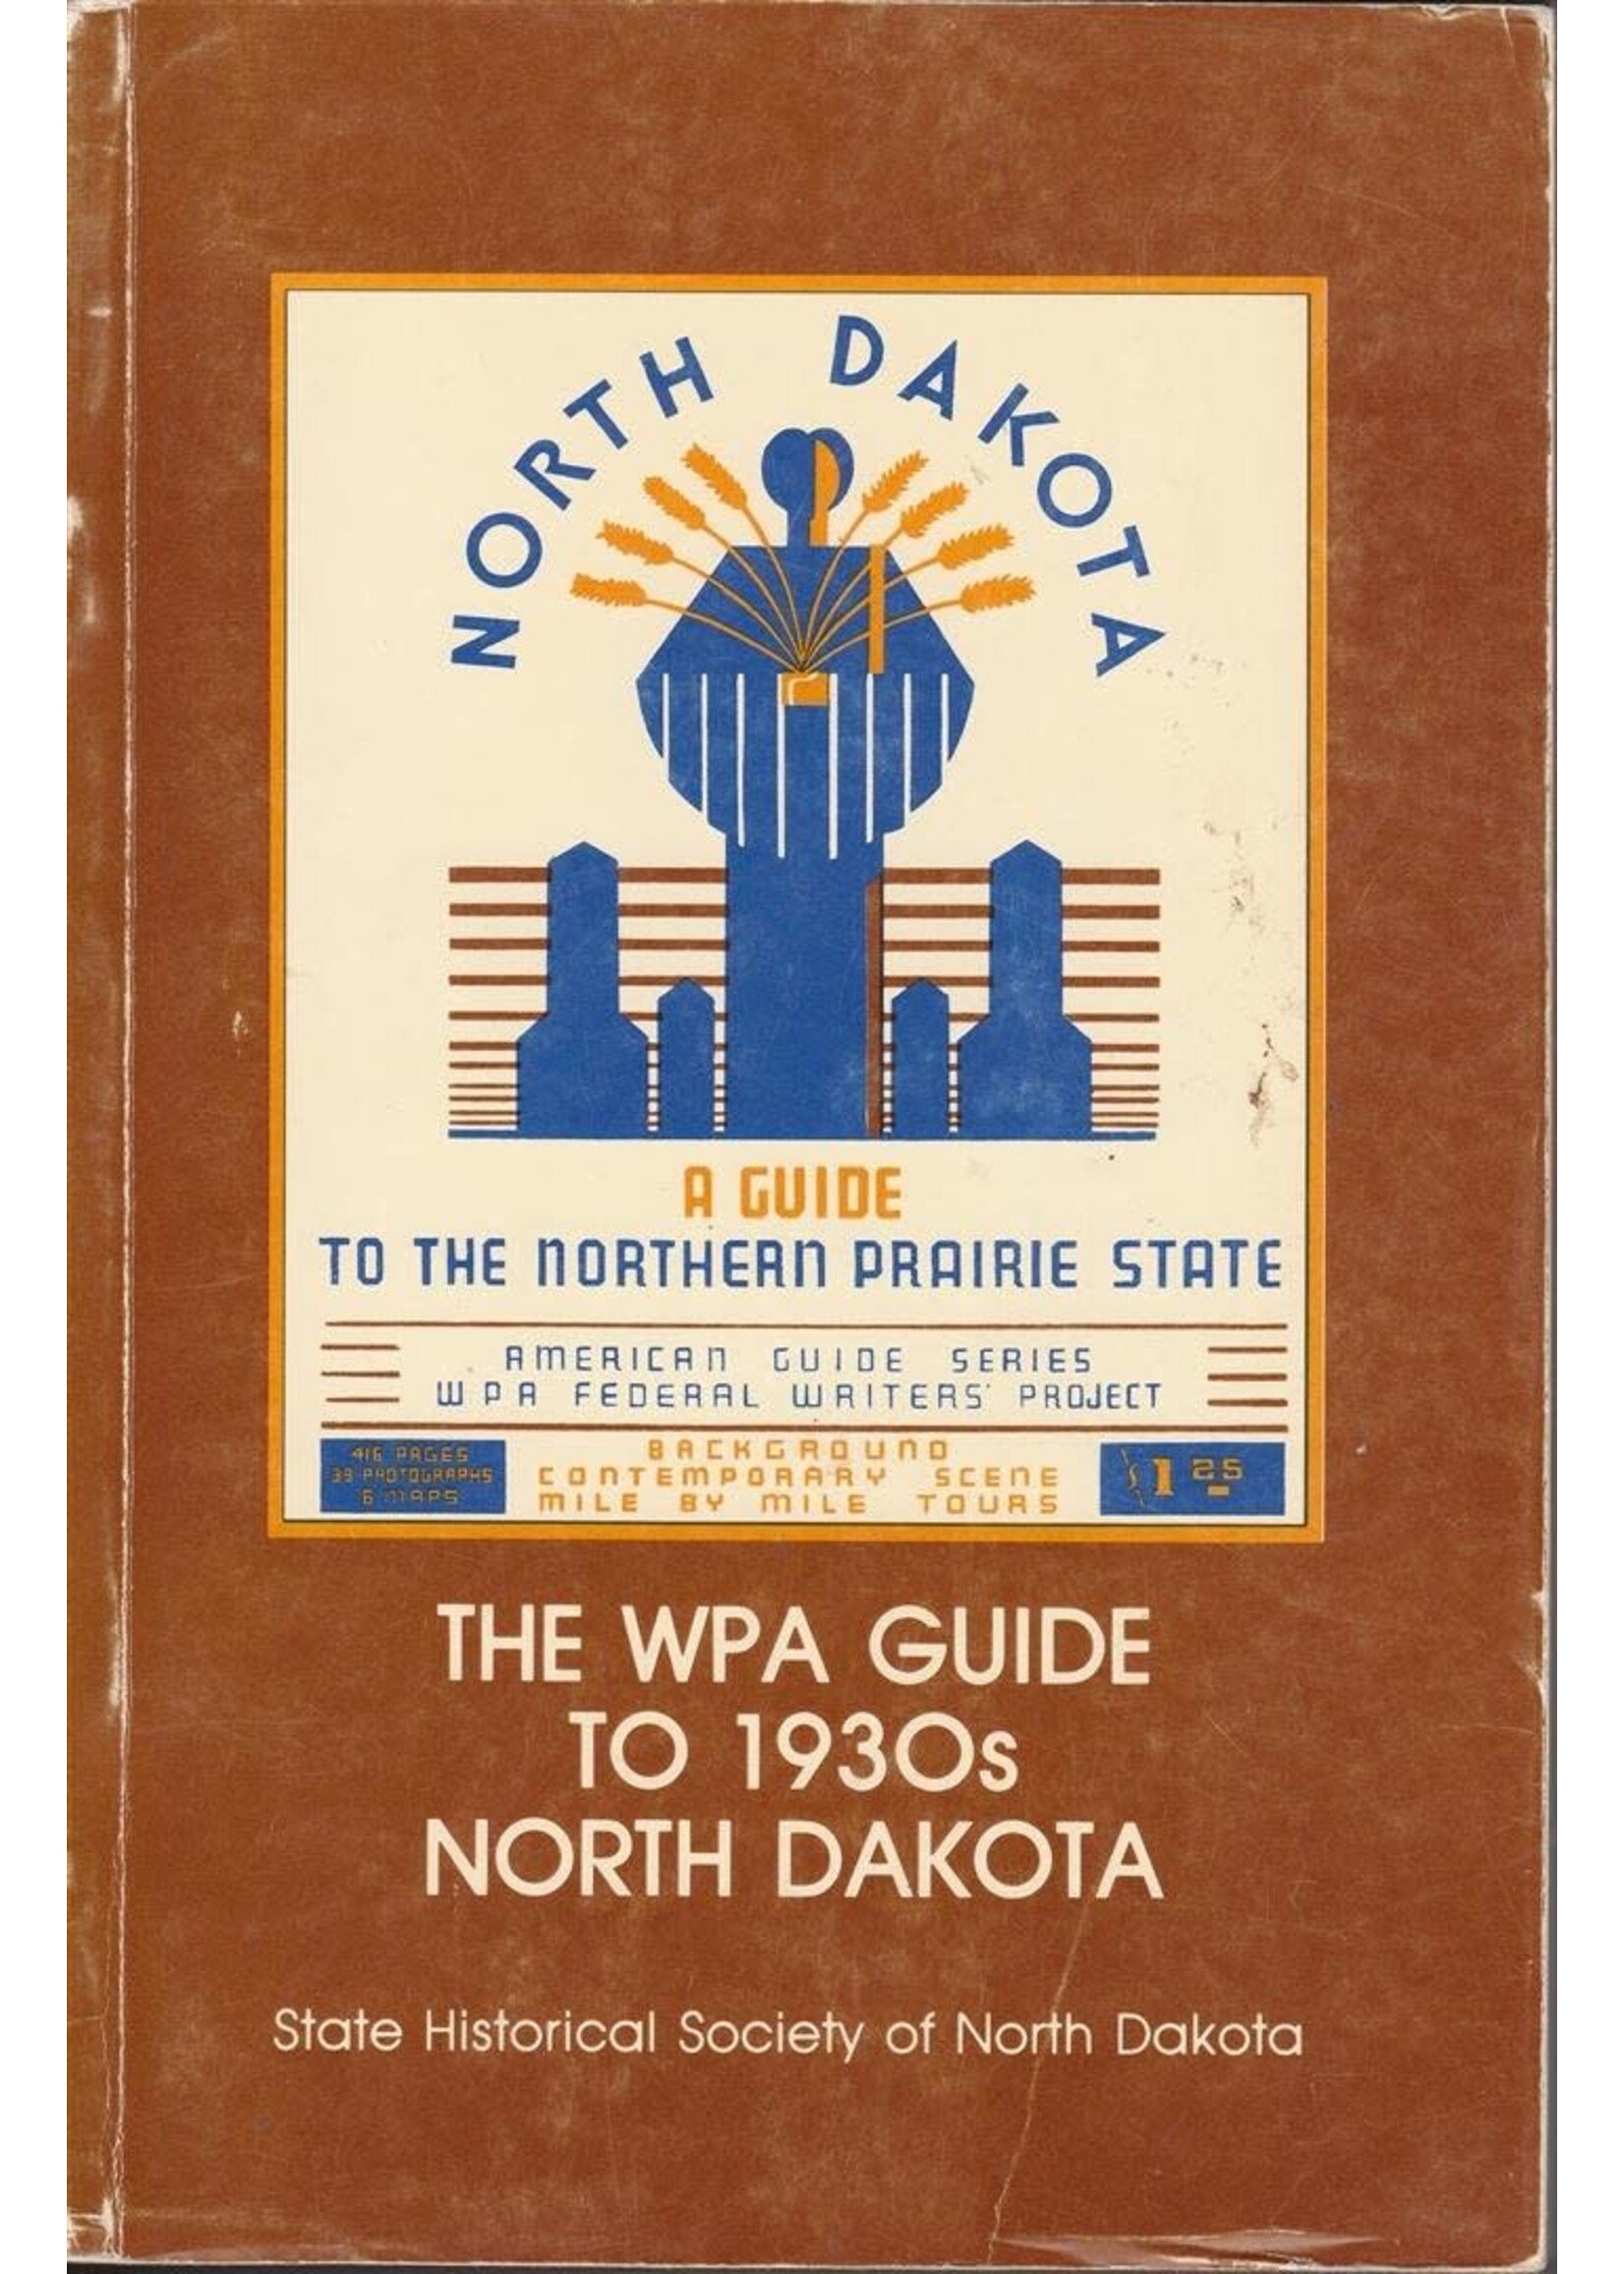 The WPA Guide to 1930s North Dakota